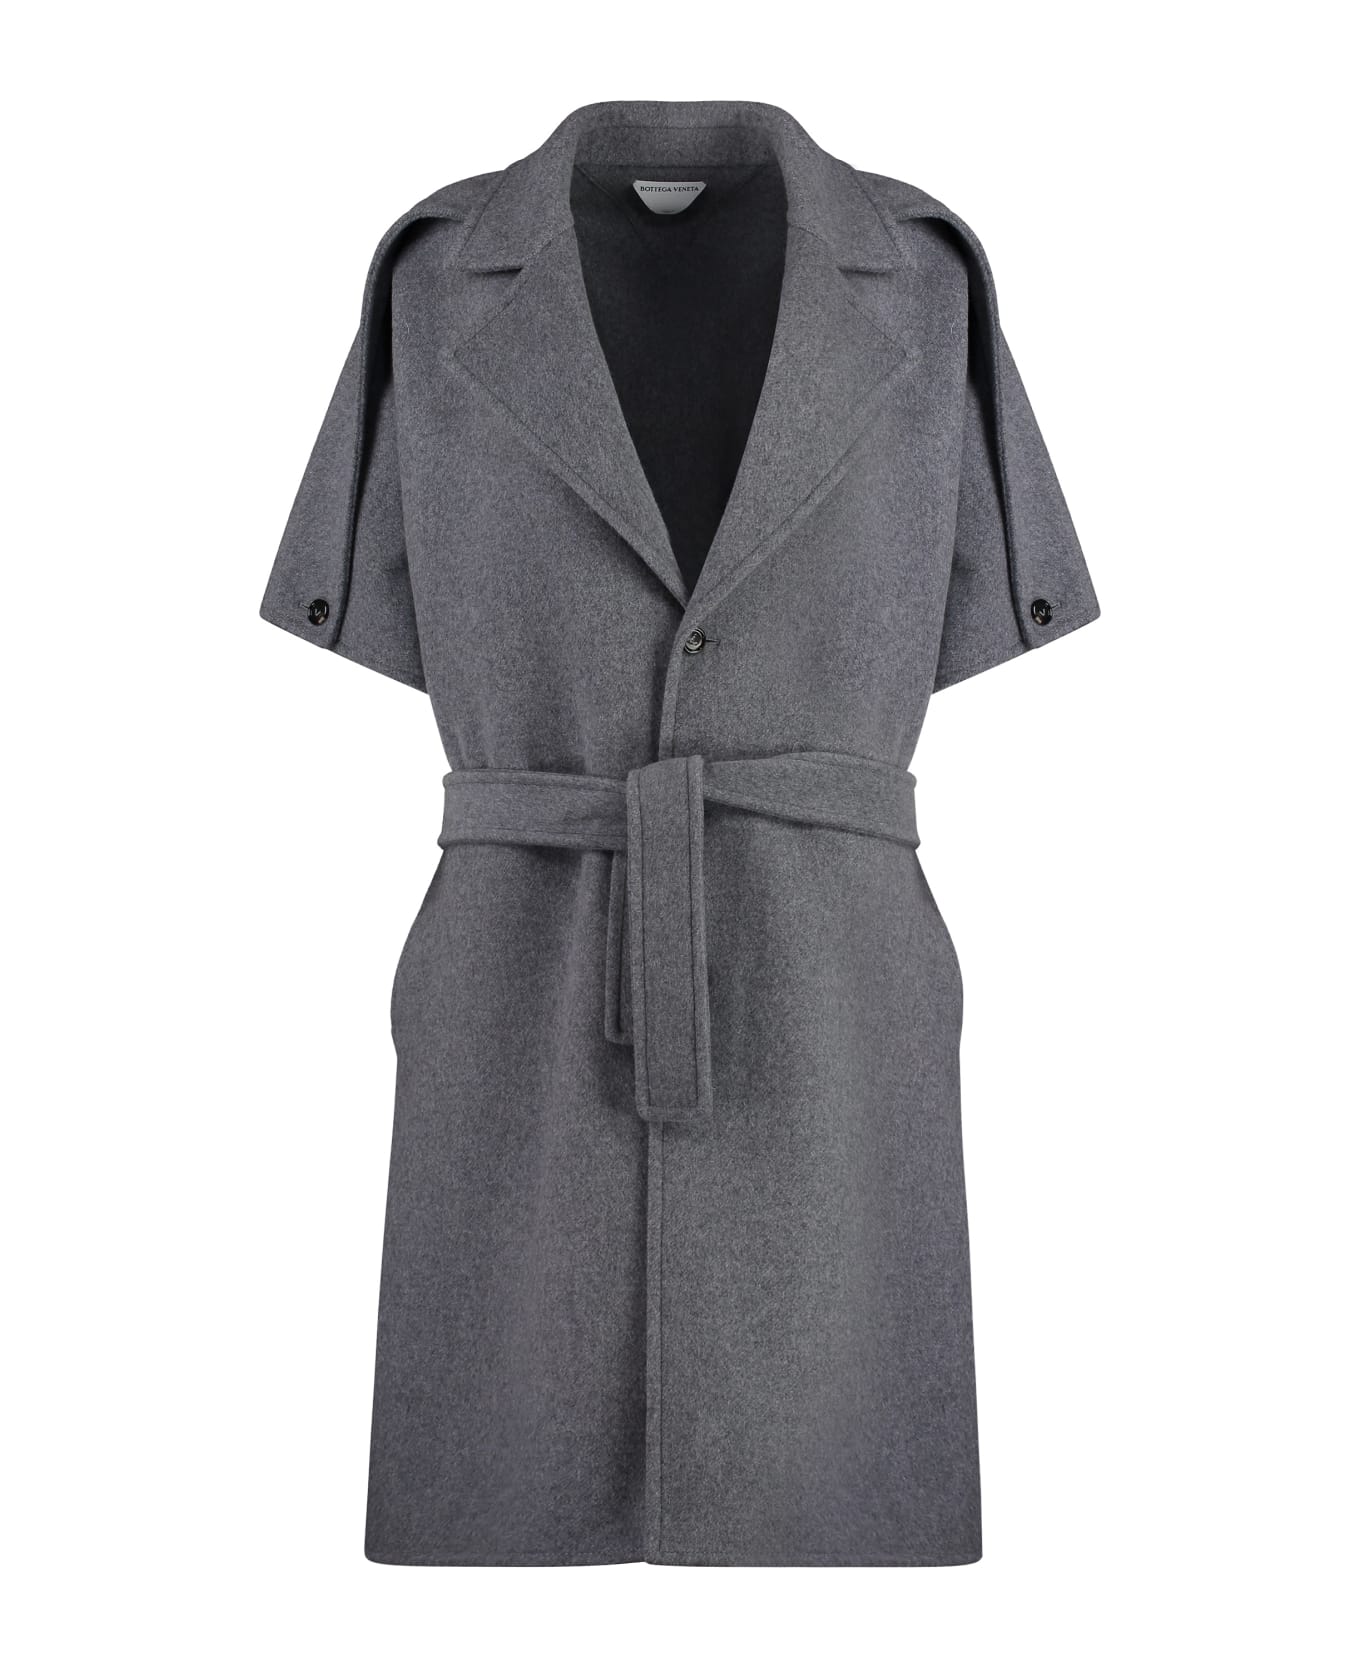 Bottega Veneta Wool And Cashmere Coat - grey コート